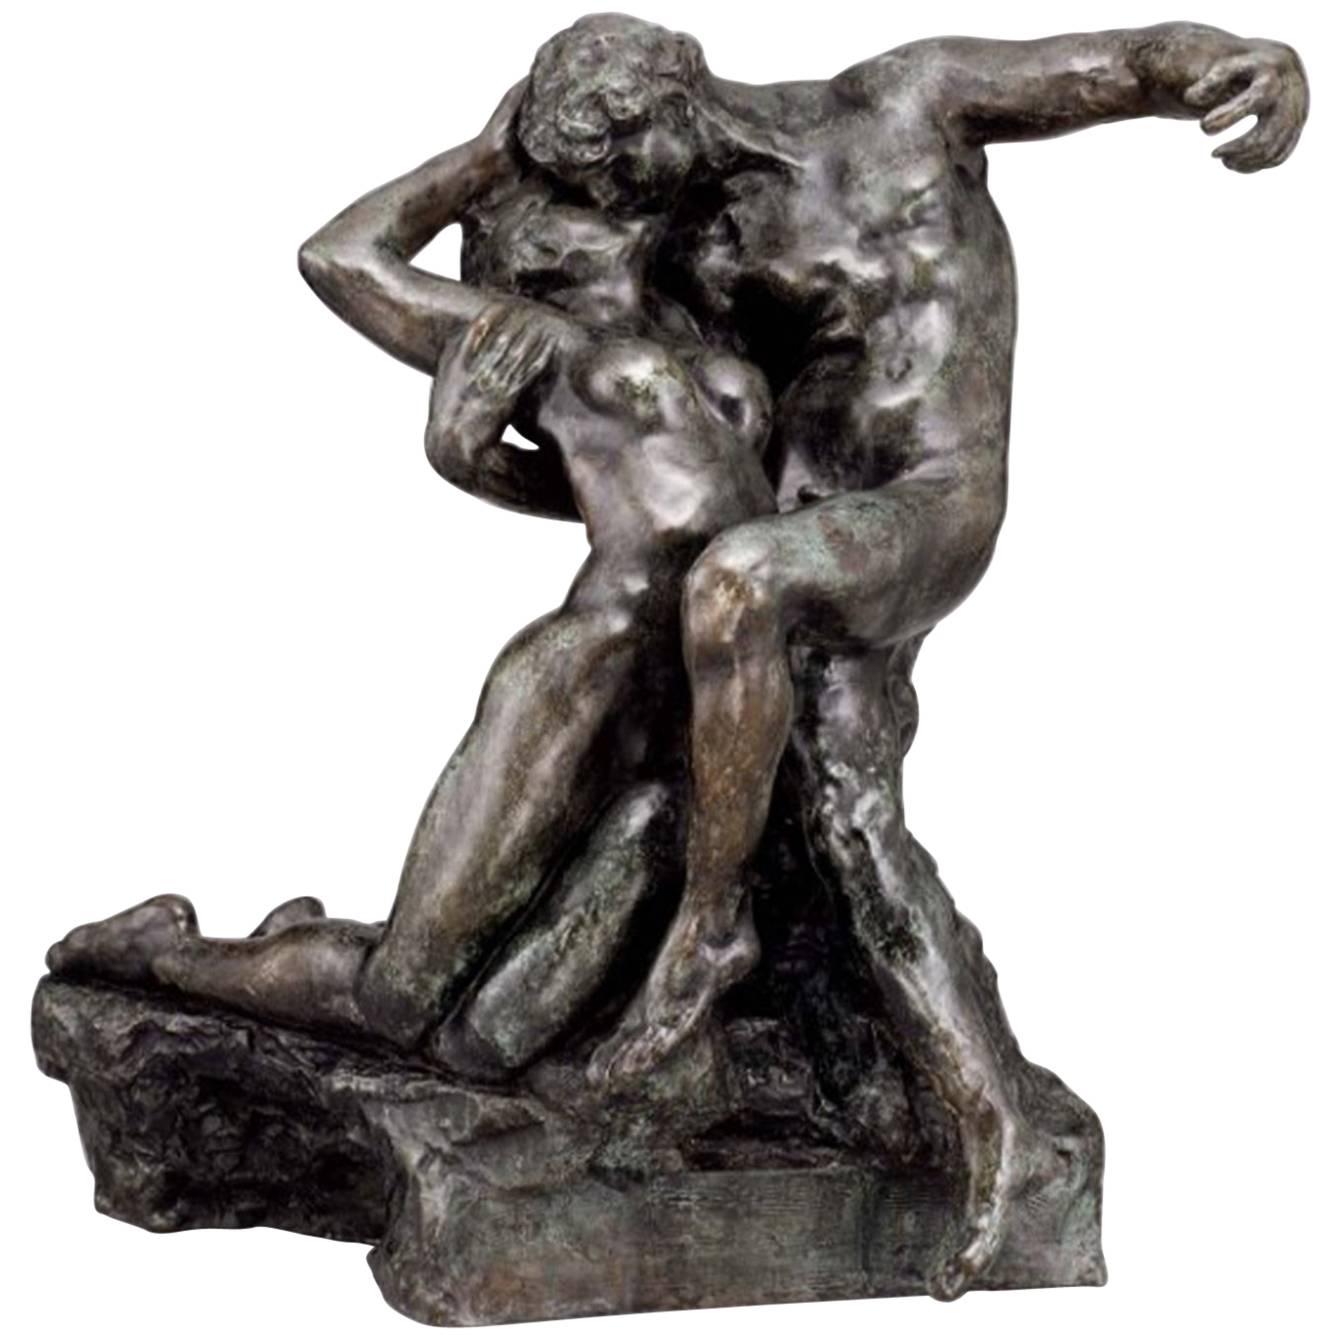 Auguste Rodin “Eternal Springtime”, 1884